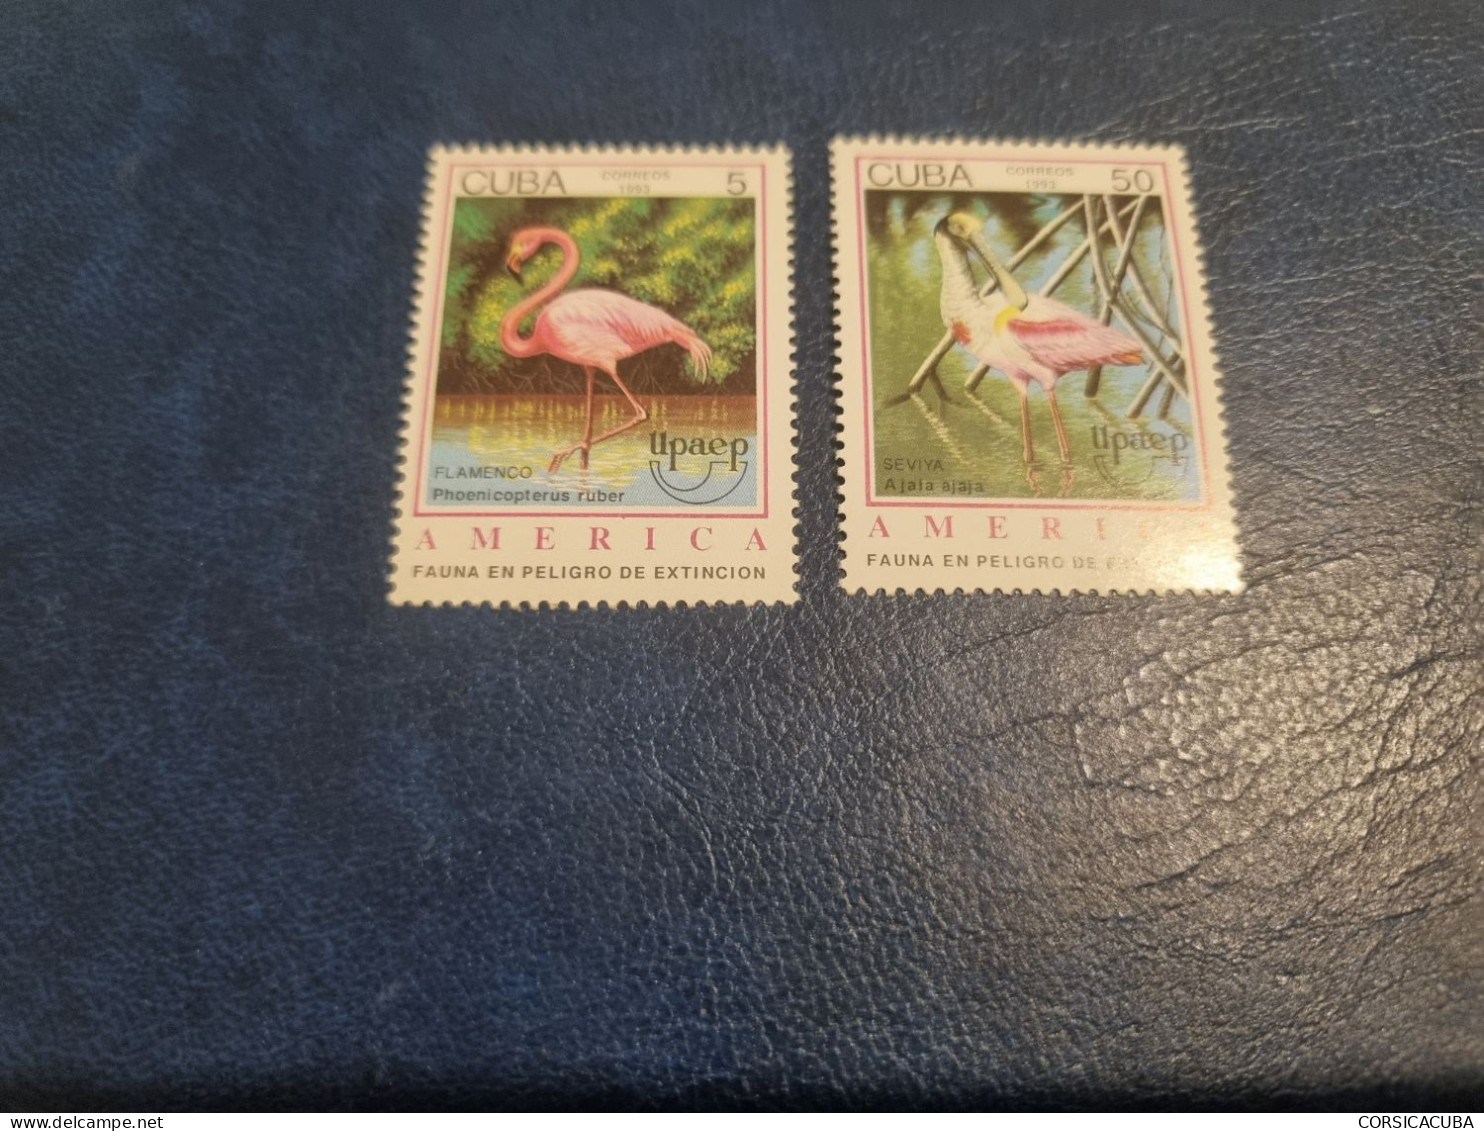 CUBA  NEUF  1993   AMERICA  UPAEP     //  PARFAIT  ETAT  //  1er  CHOIX  // - Unused Stamps